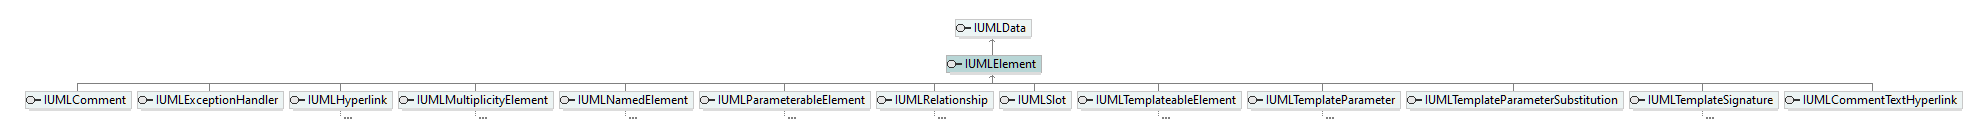 UModelAPI_diagrams/UModelAPI_p220.png